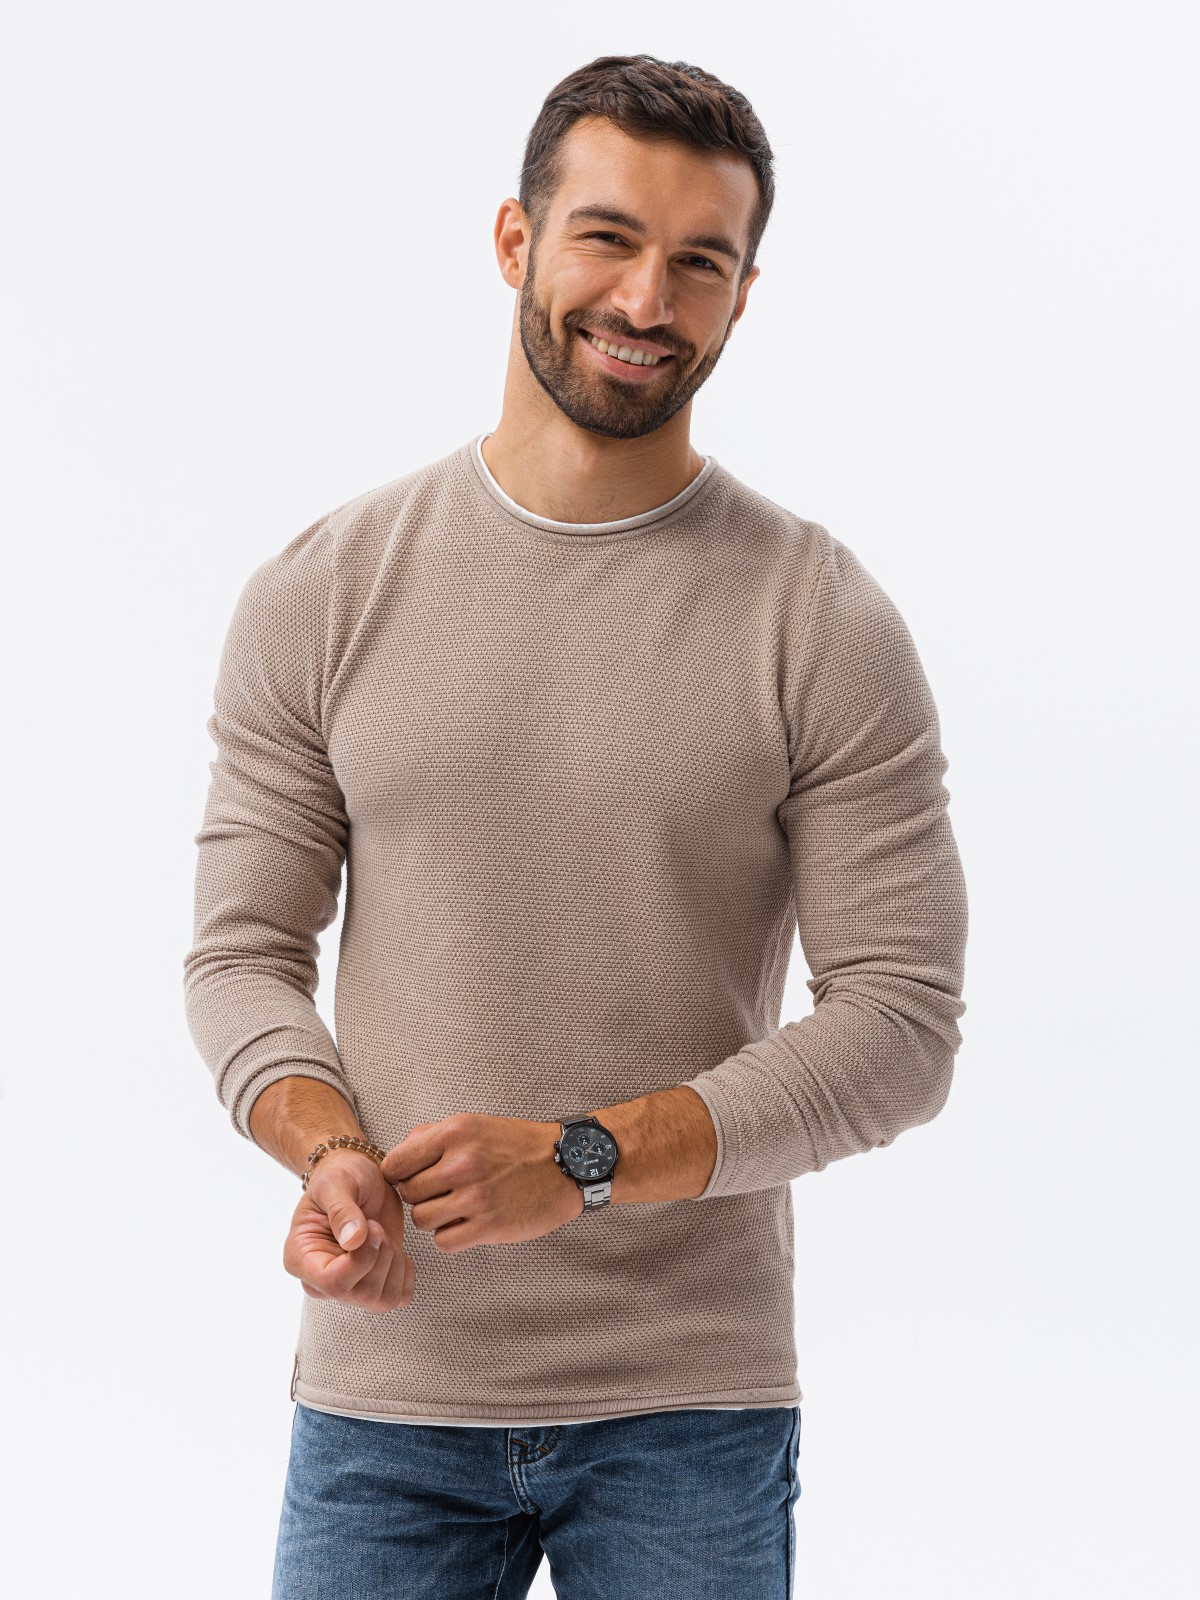 Herensweater E121 - bruin, maat M